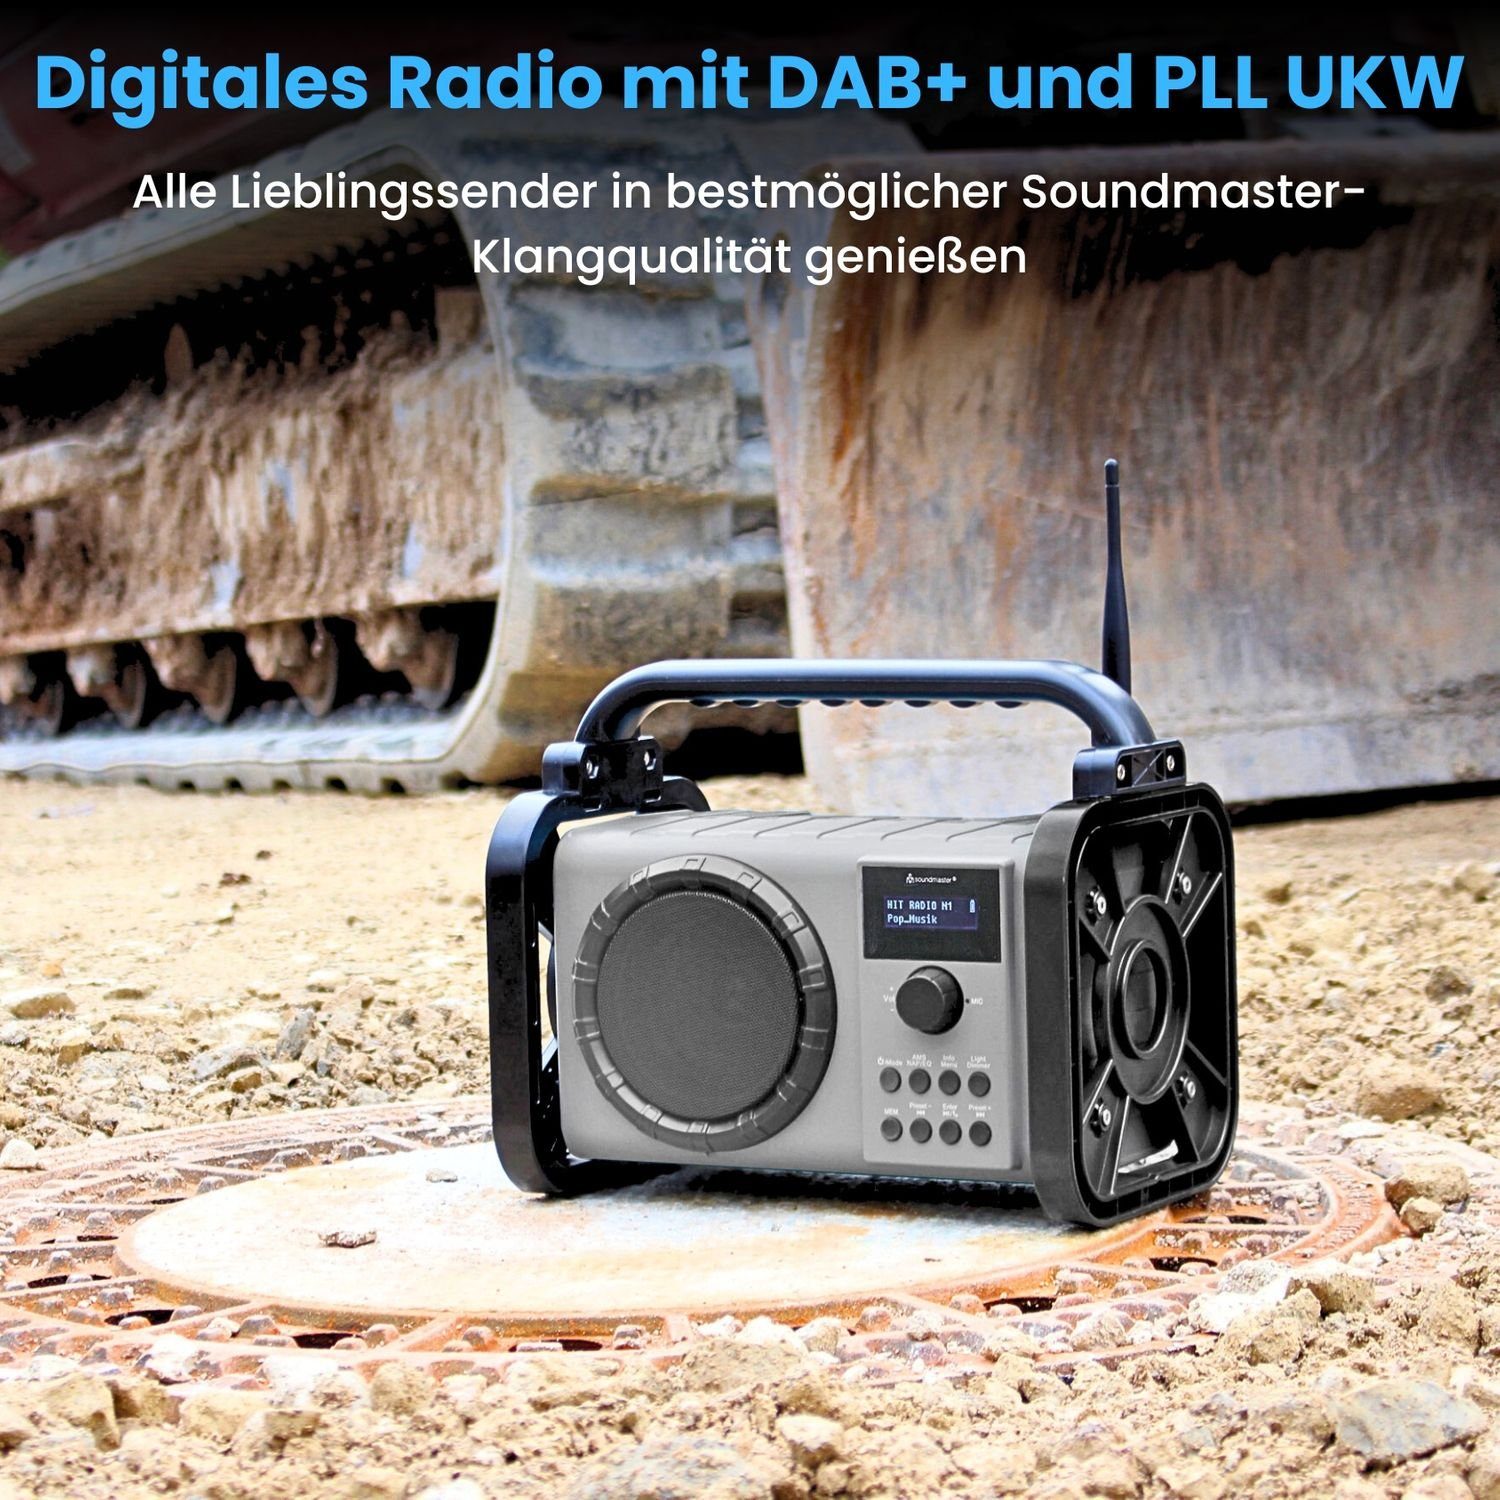 Soundmaster DAB80SW Baustellenradio IP44 (DAB) MW, FM, Digitalradio DAB+ AM) Bluetooth spritzwassergeschützt Akku (DAB+, PLL-UKW